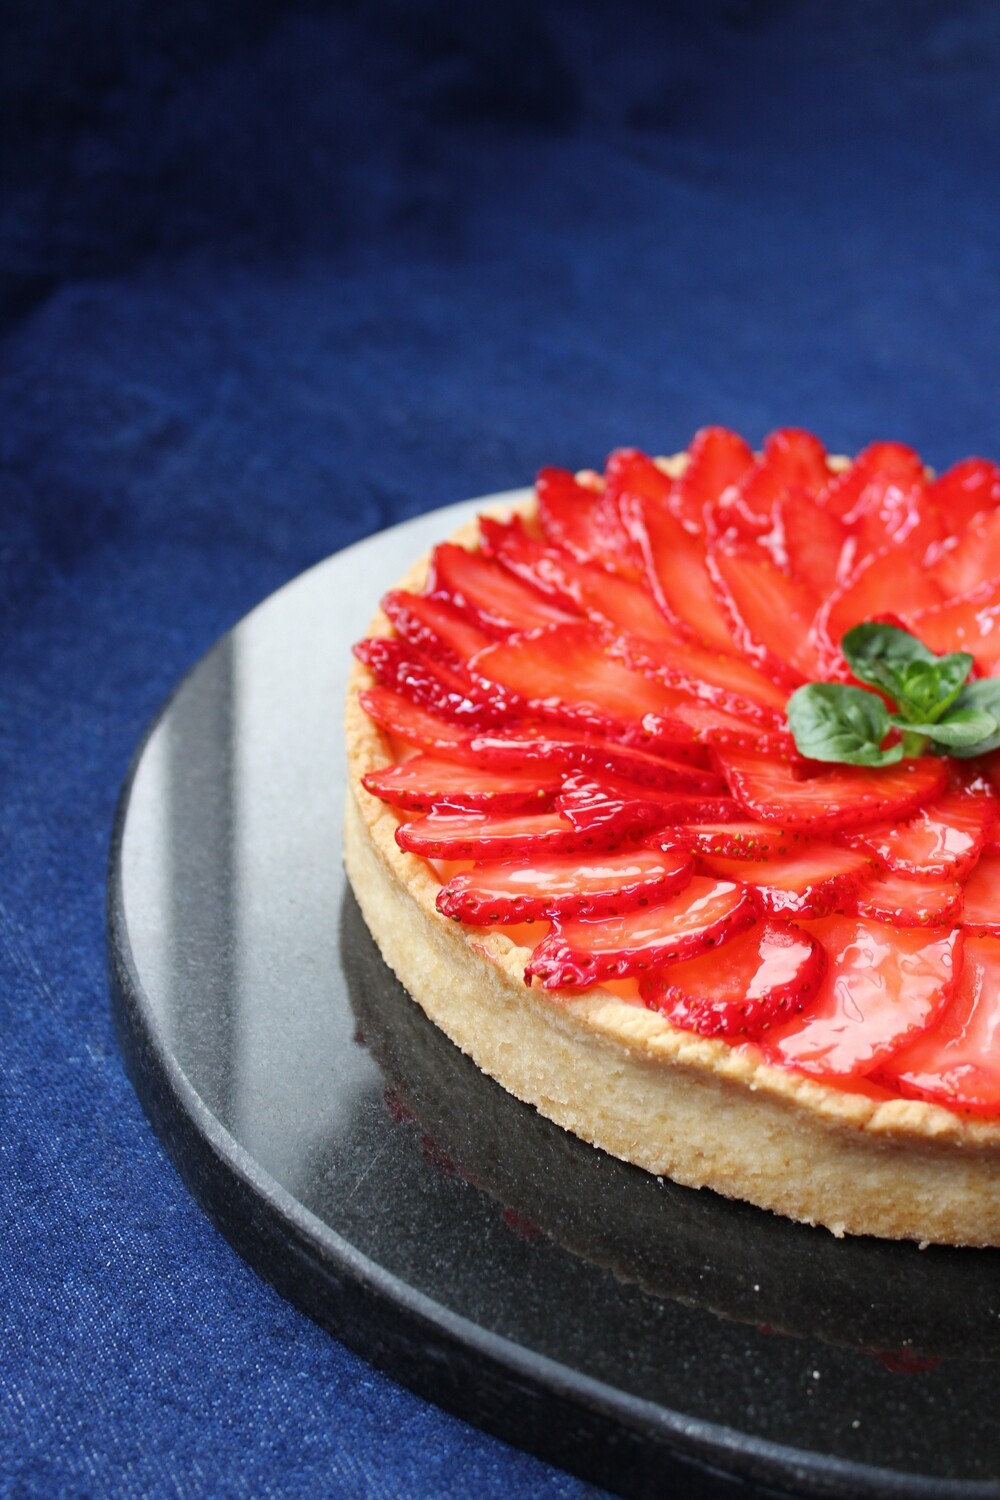 Strawberries and Berries Tart, Size of Cake: Regular serves 12+